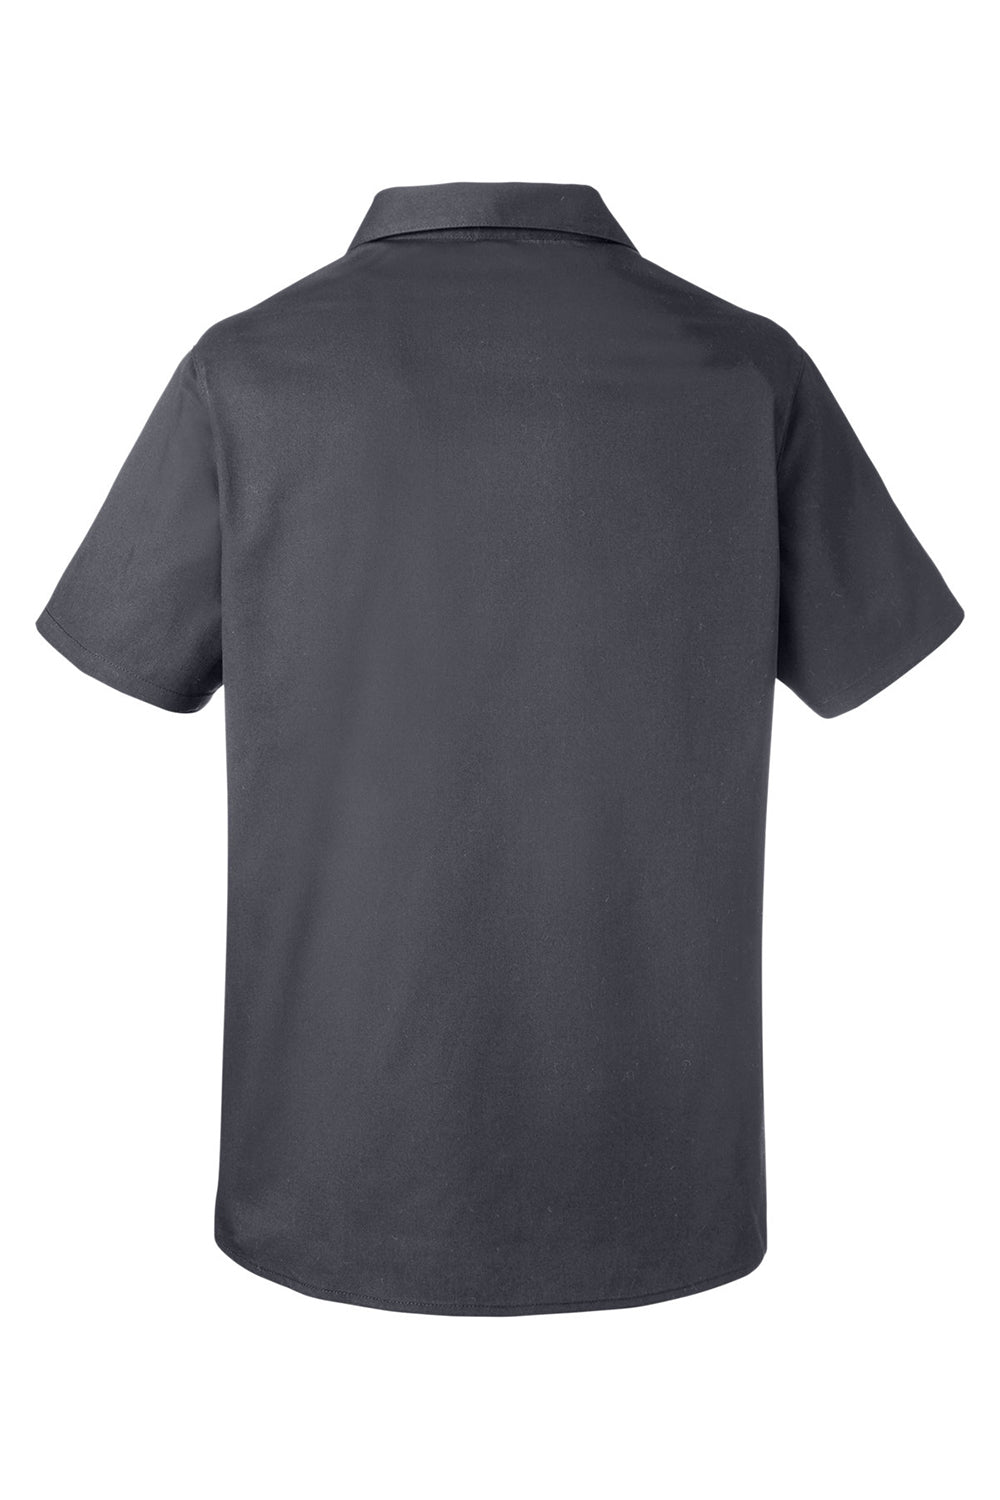 Harriton M585W Womens Advantage Short Sleeve Button Down Shirt w/ Double Pockets Dark Charcoal Grey Flat Back